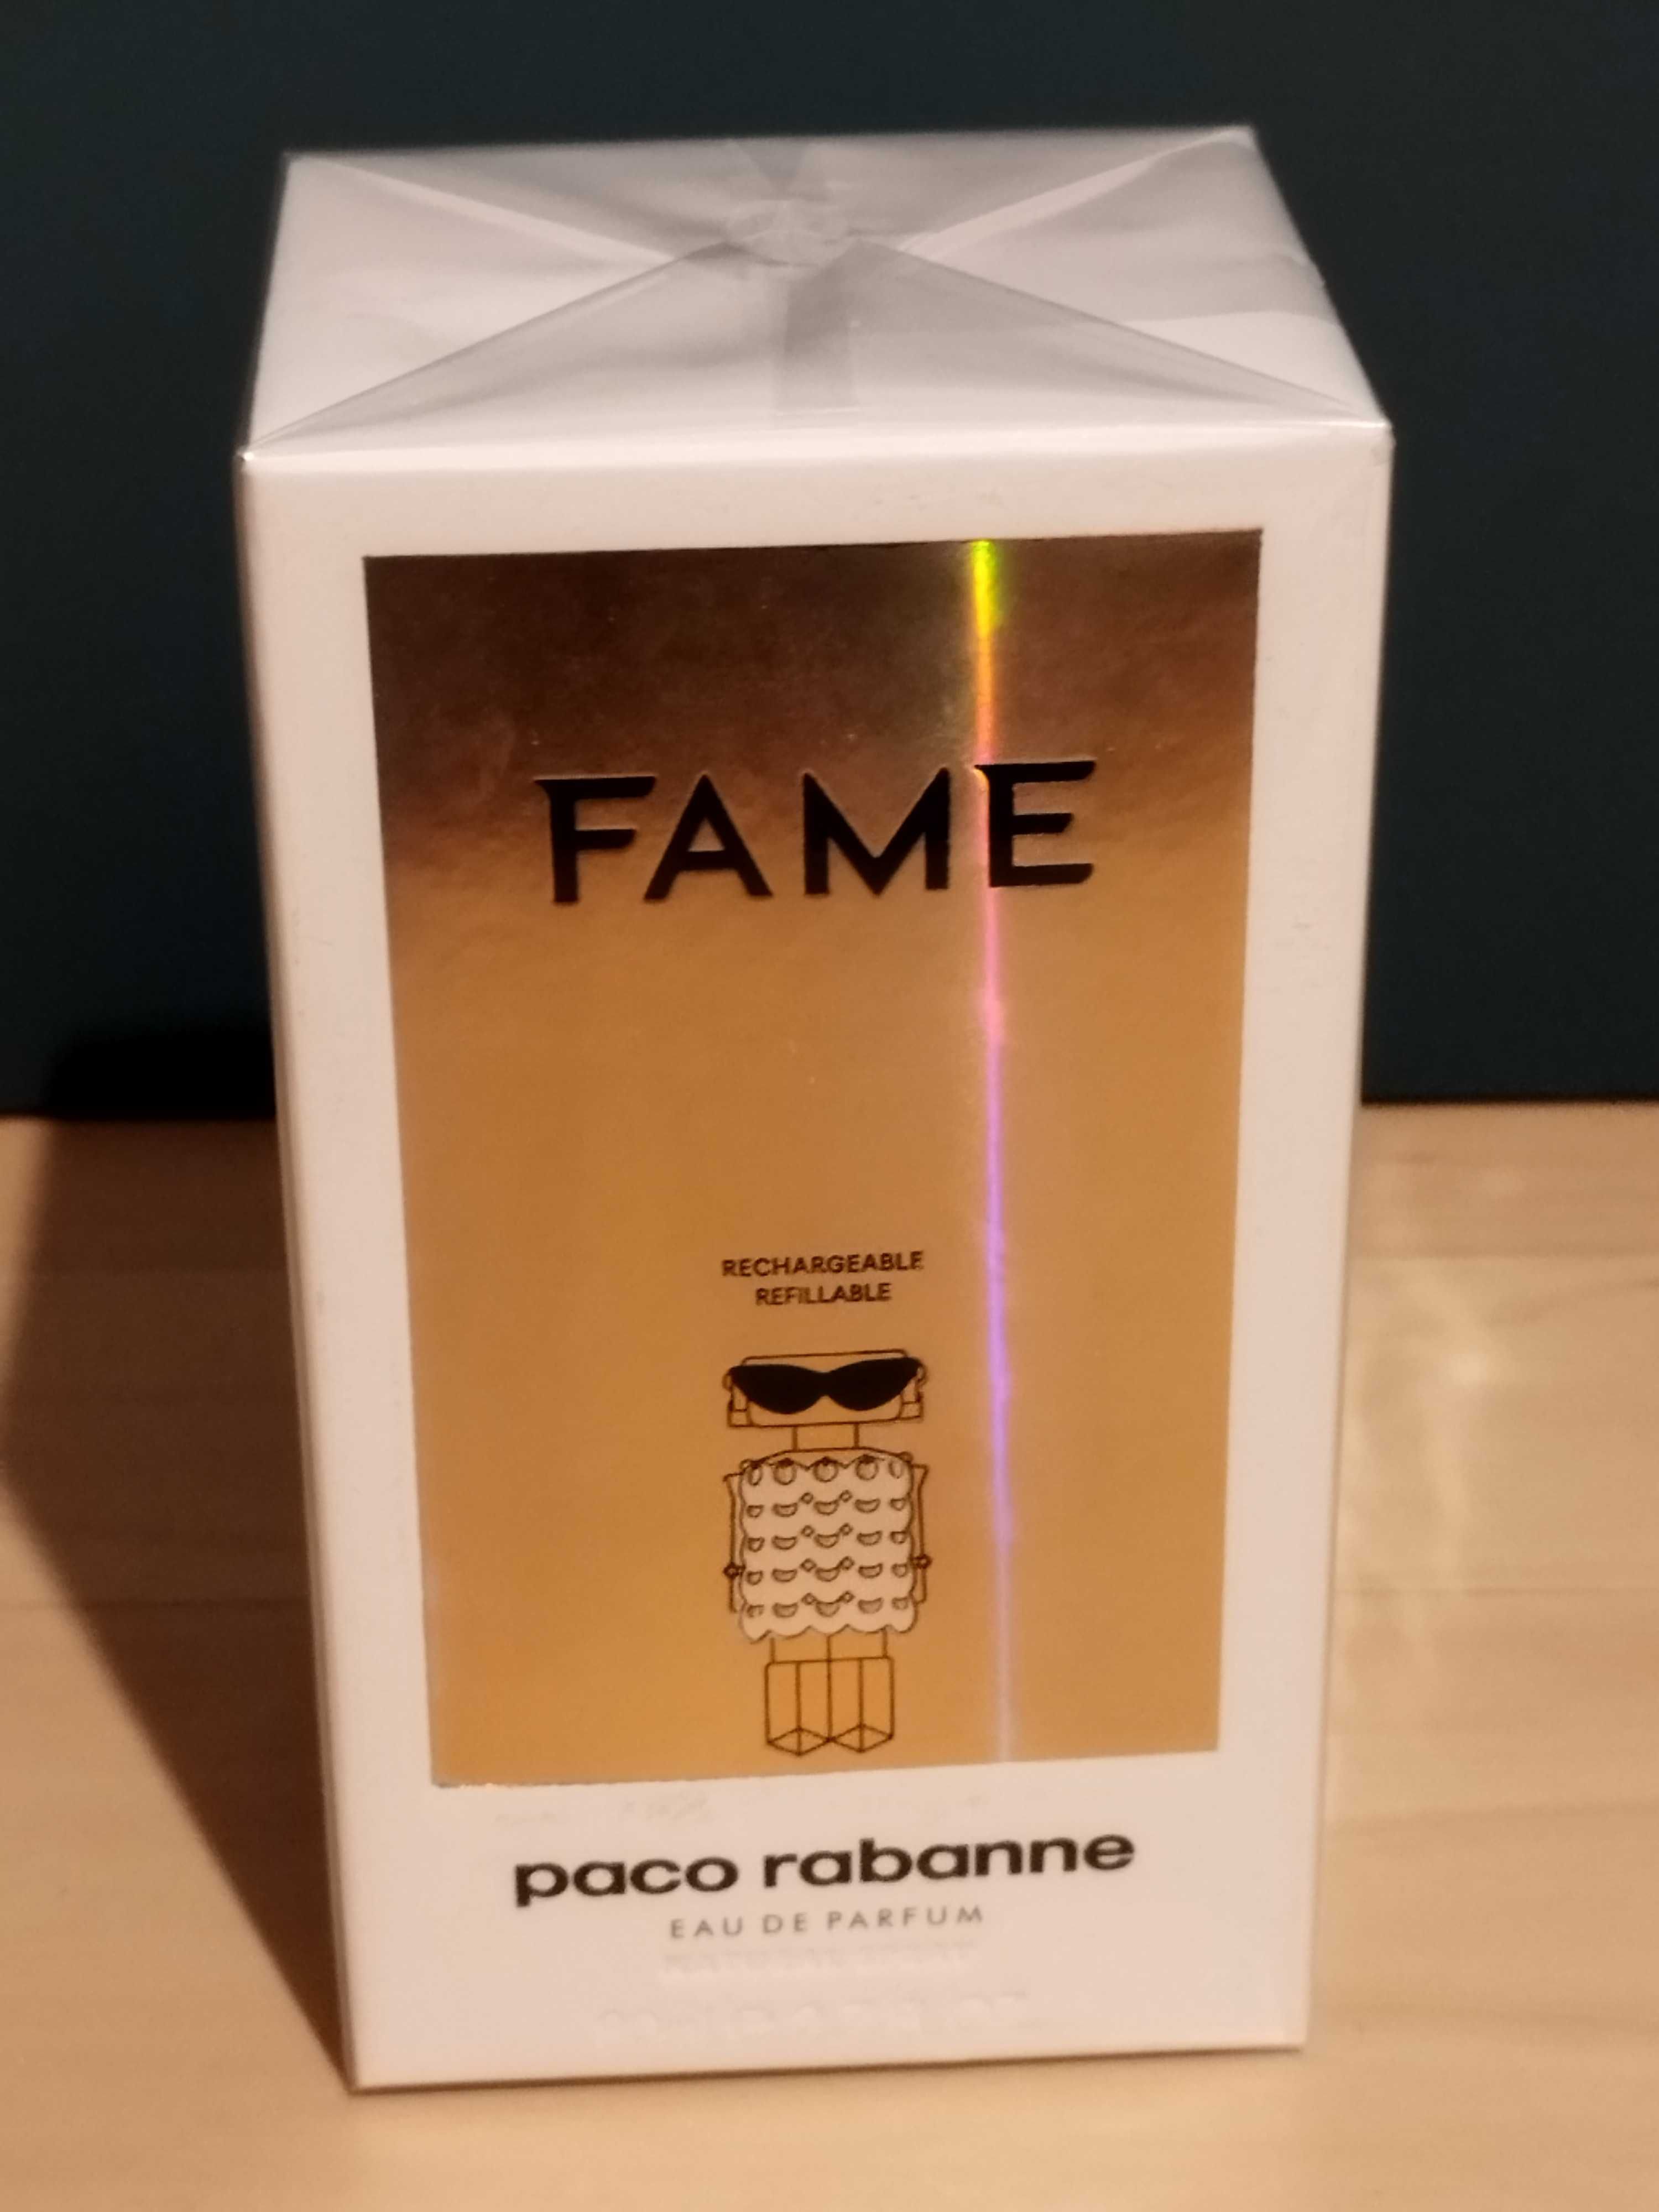 Parfum  - FAME Paco rabanne